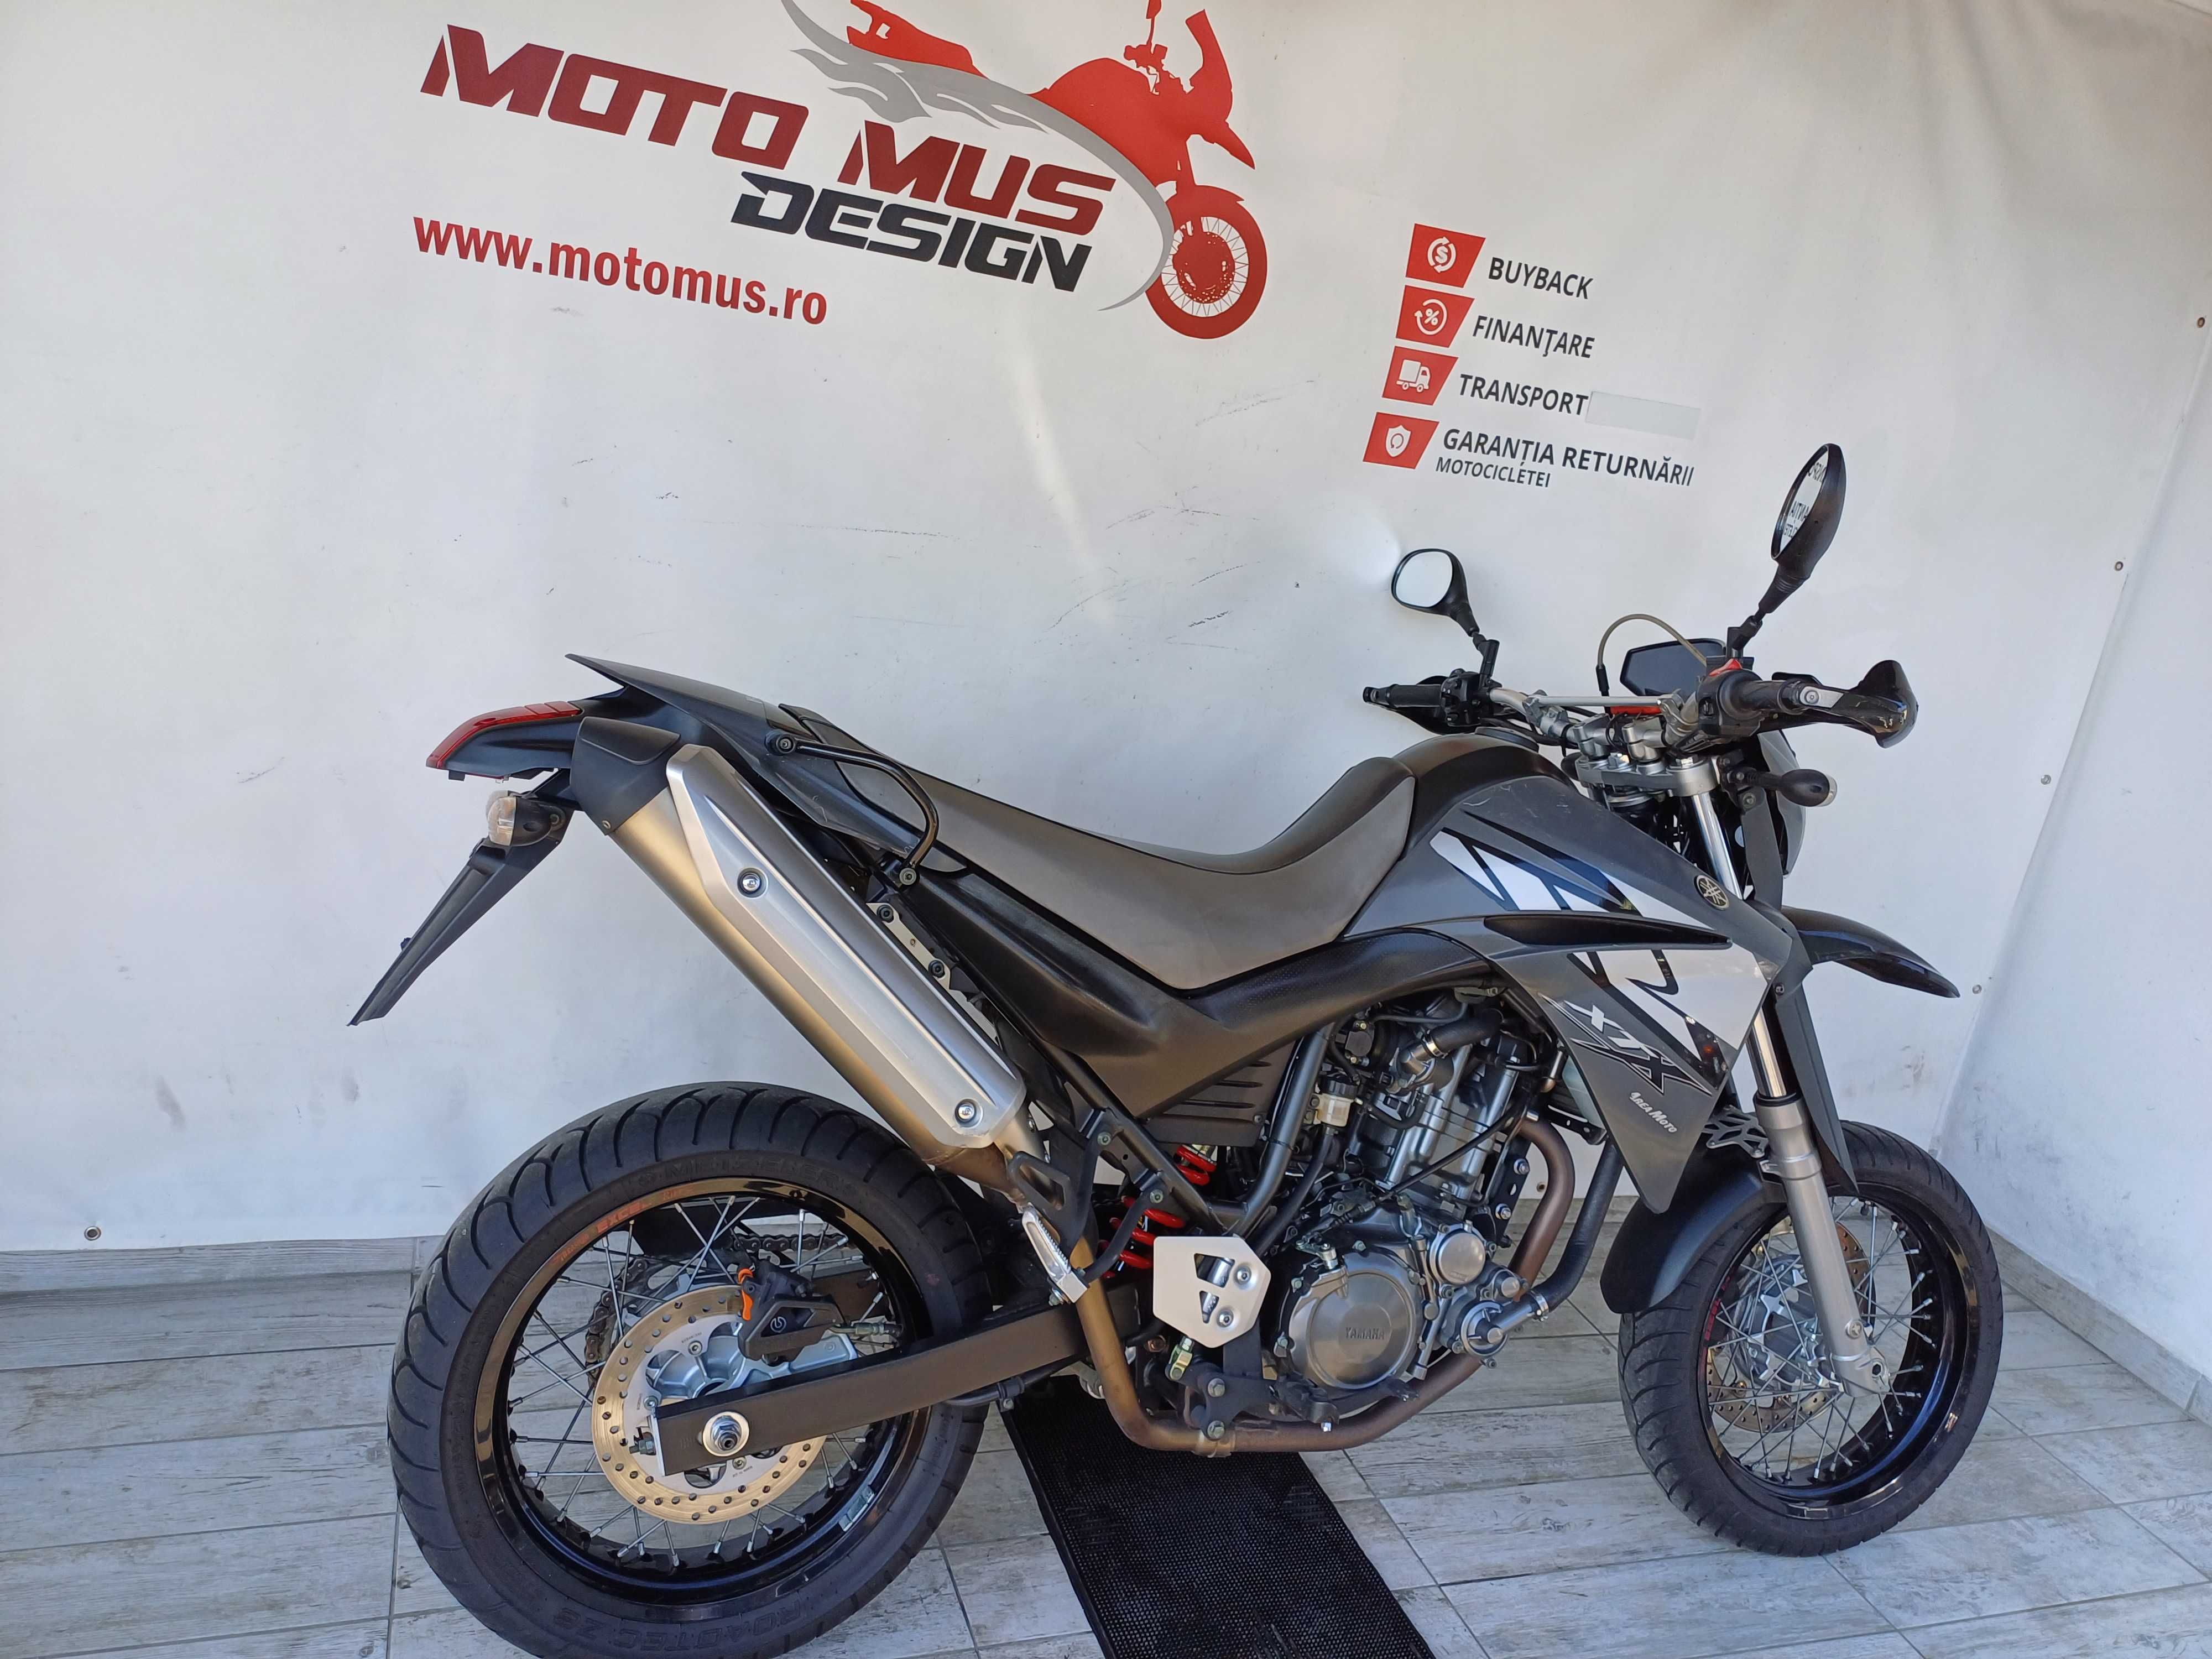 MotoMus vinde Motocicleta Yamaha XT660X 660cc 48CP - Y00777